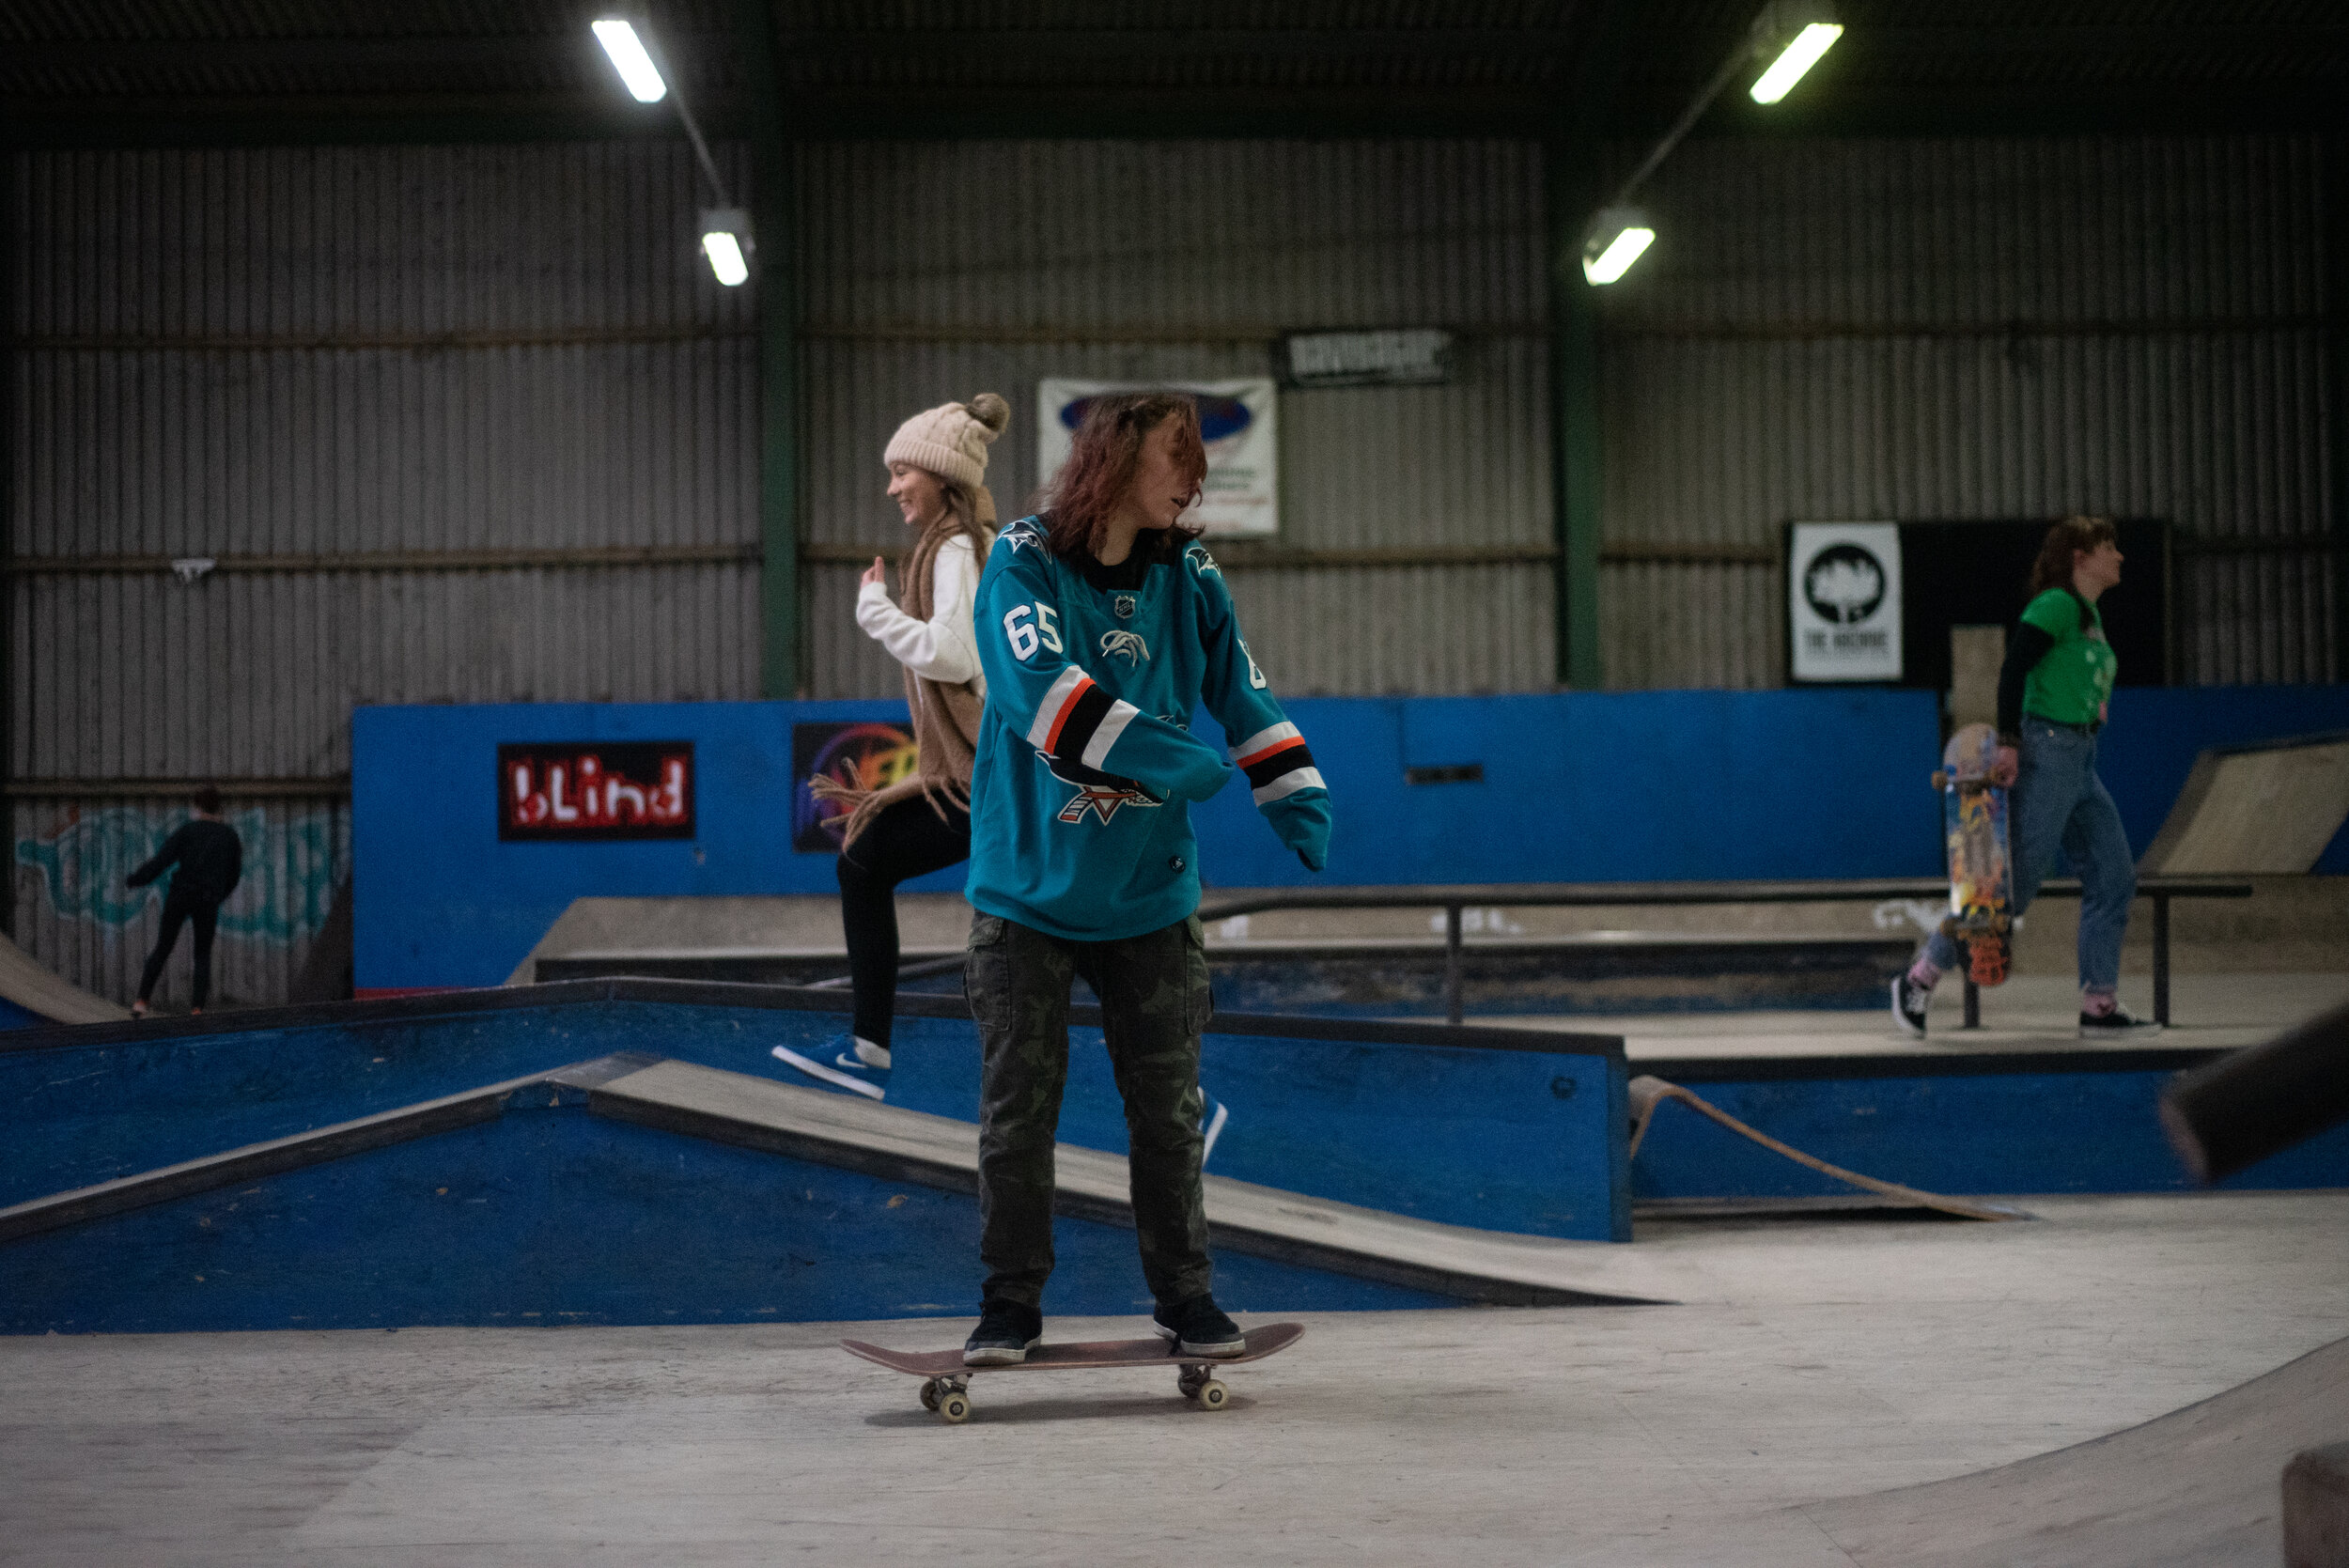 Girls Skate Sesh Ramp City Jan 2020 - Images Claire Griffiths (28).jpg